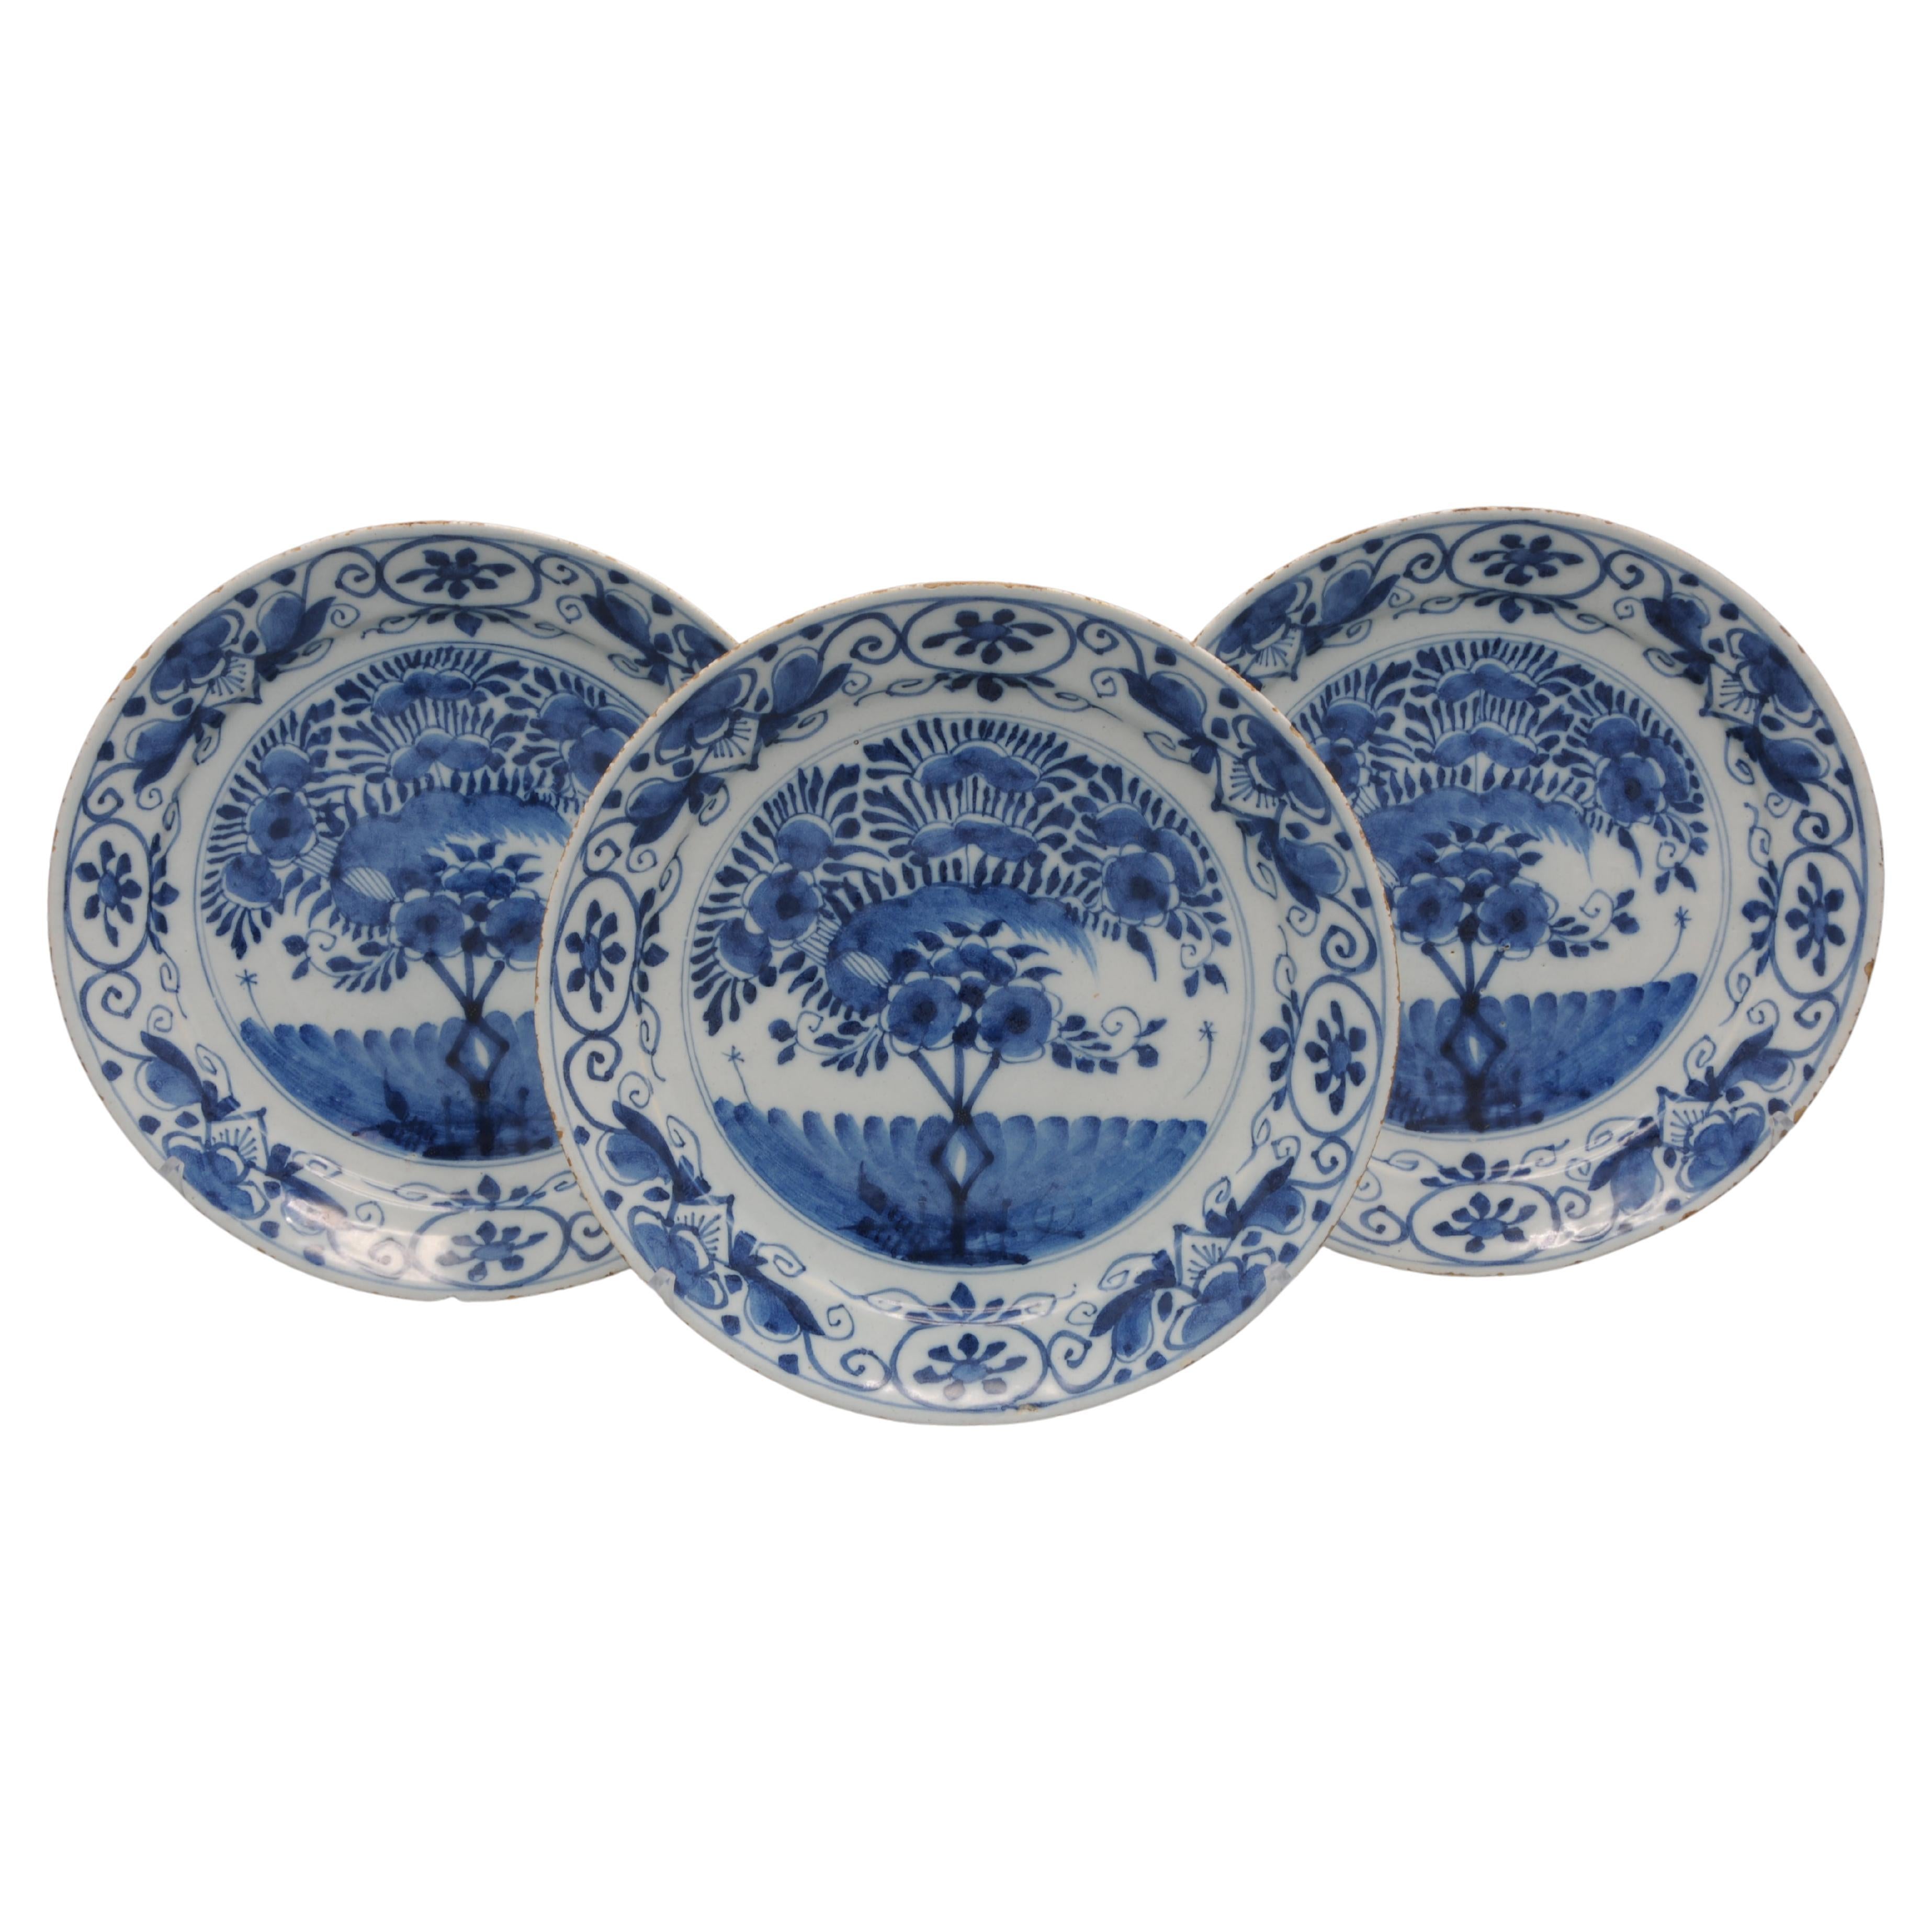 Delft Blue set of 'Tea Tree' plates - mid 18th century For Sale